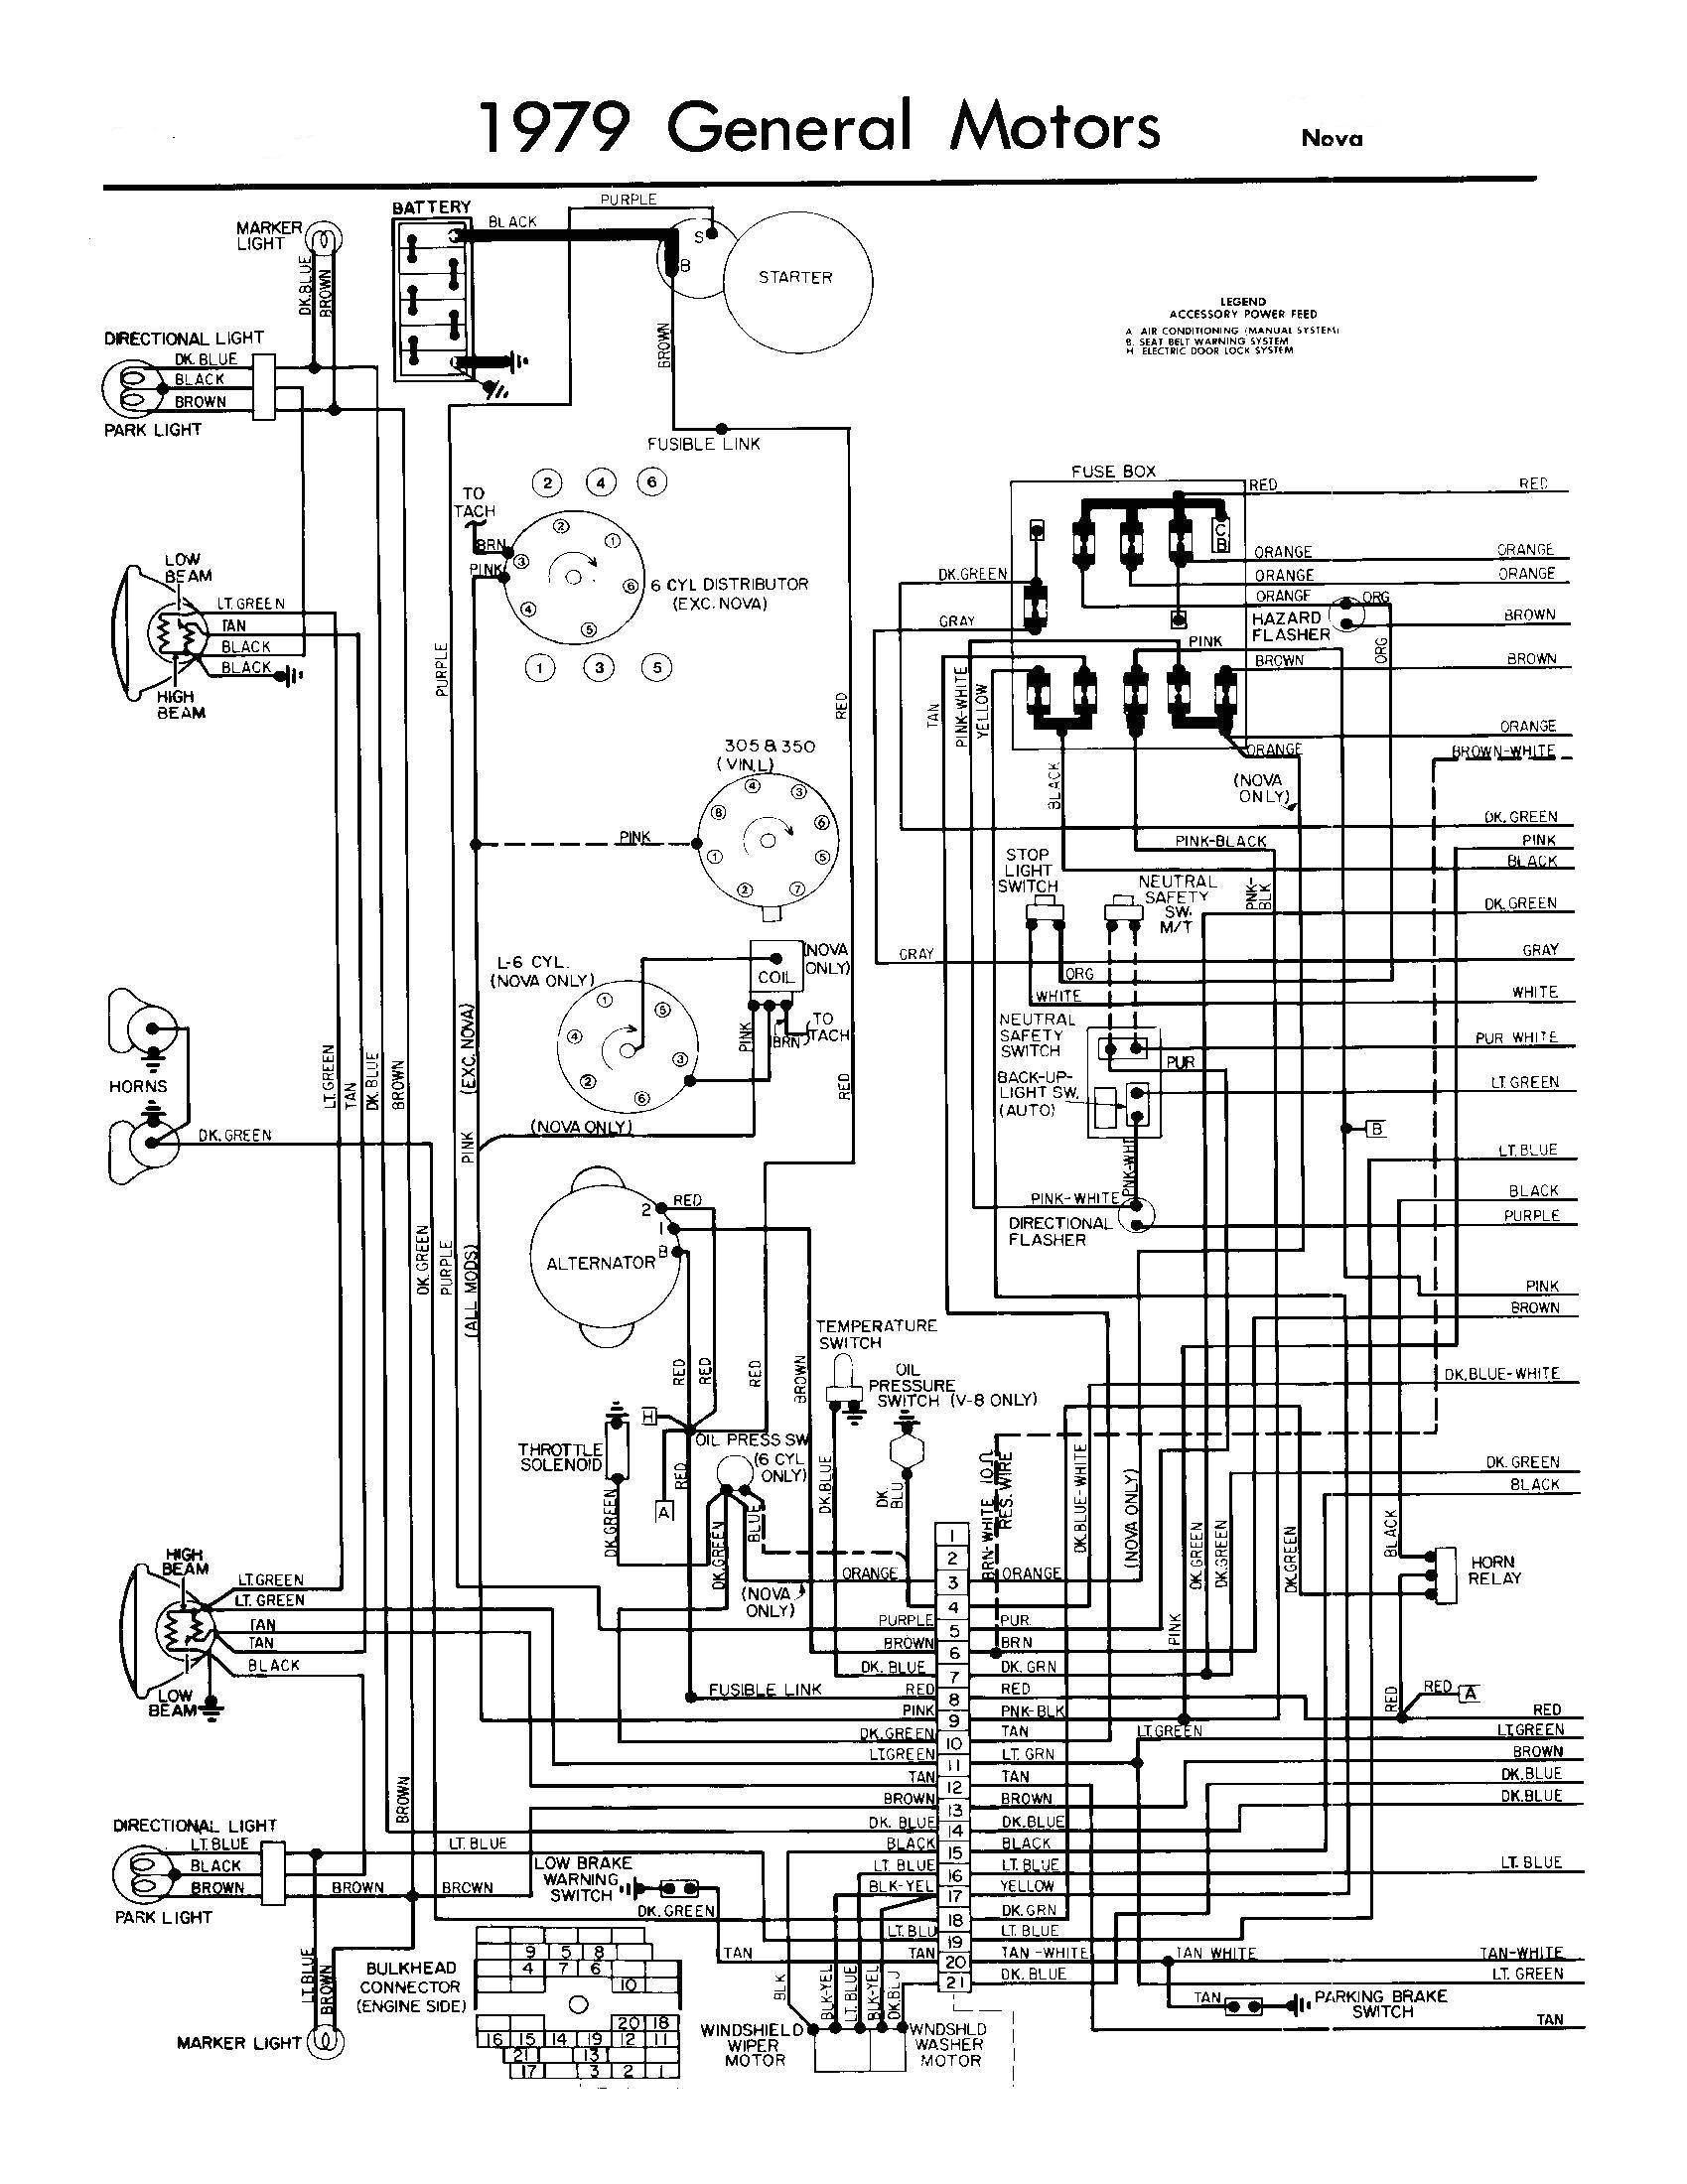 1982 chevy truck wiring diagram 1975 gmc truck wiring diagrams 1975 circuit diagrams init e280a2 of 1982 chevy truck wiring diagram jpg